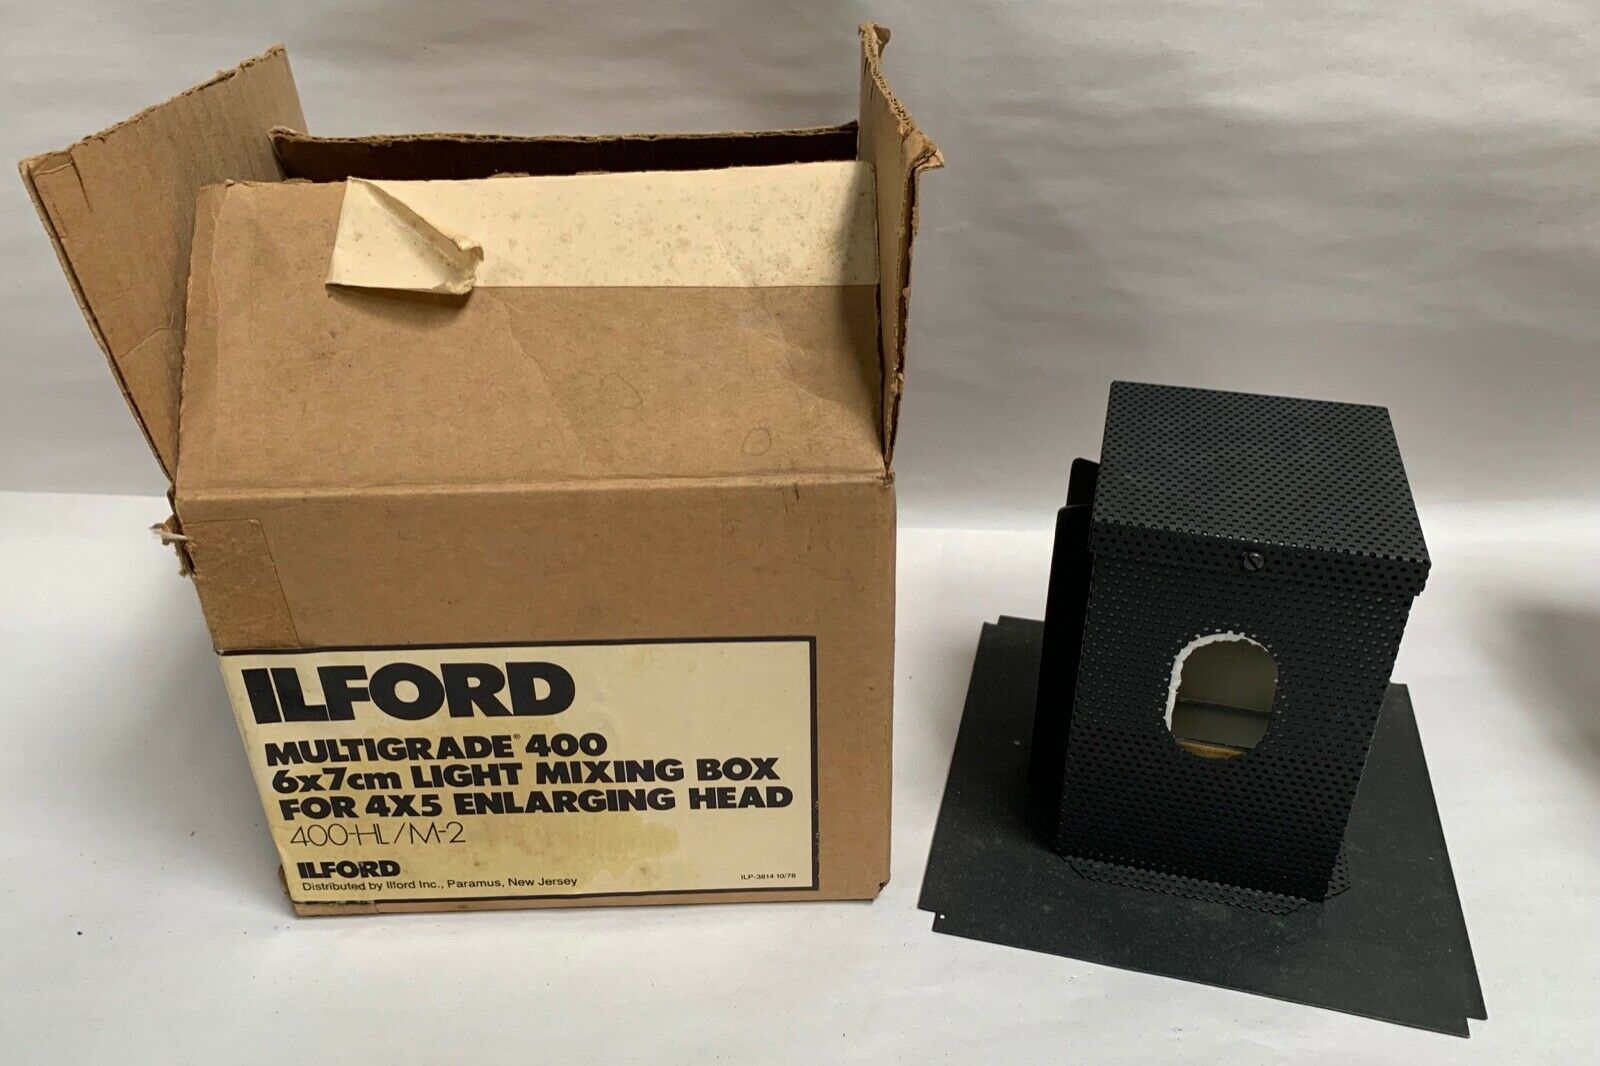 Ilford 400-hl/m-2 Multi-grade 400 6x7cm 4x5 Enlarging Head Light Mixing Box (a25